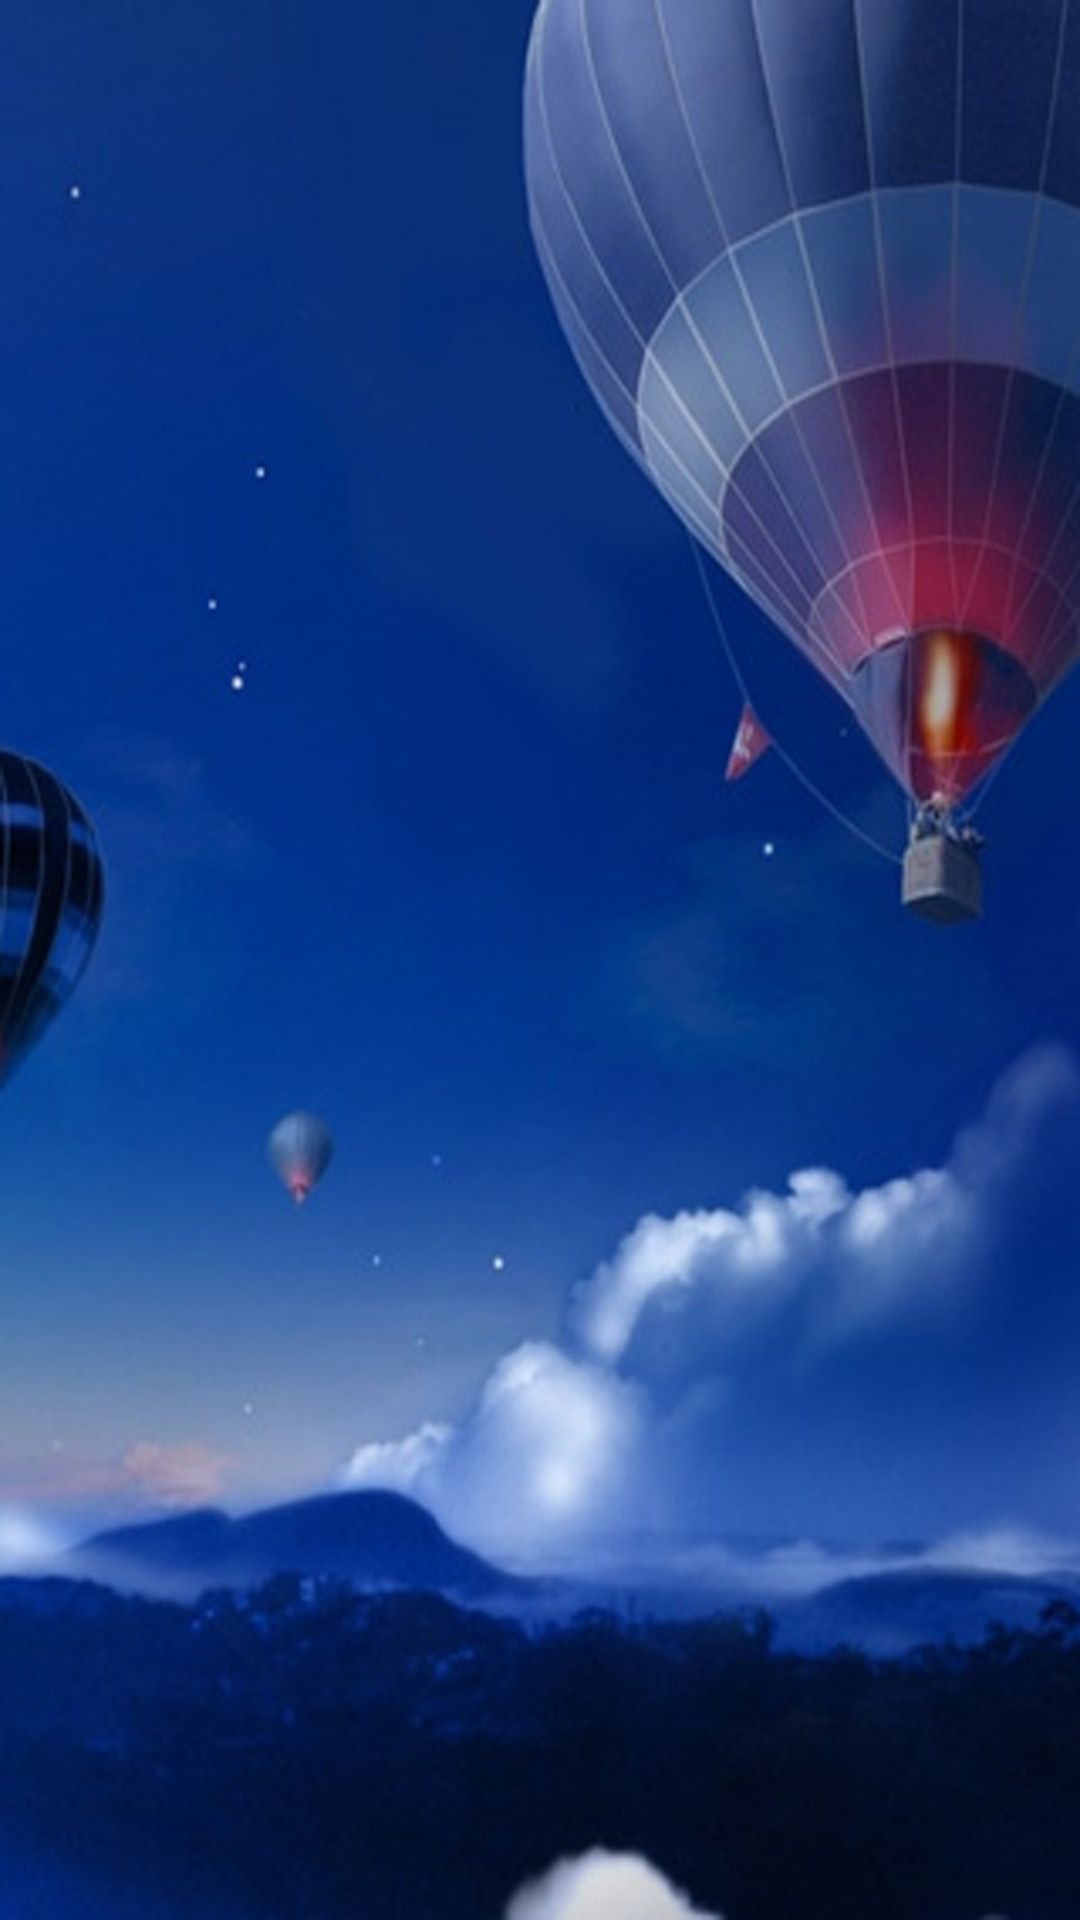 Free download Hot air balloon iphone wallpaper Samsung Galaxy S5